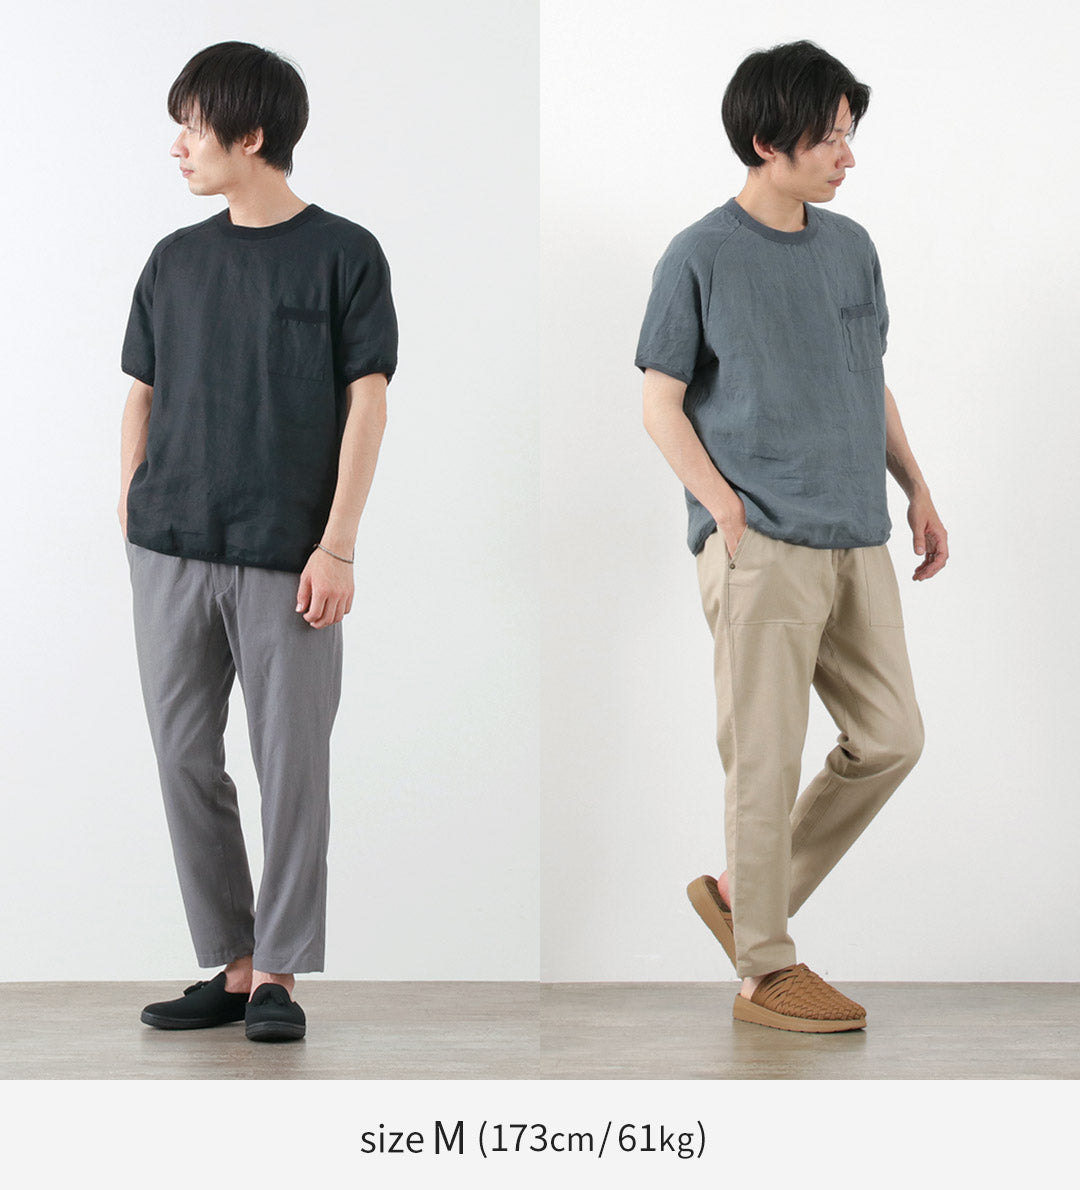 RE MADE IN TOKYO JAPAN（アールイー） フレンチリネンTシャツ / プルオーバー 半袖シャツ メンズ 麻 日本製 FRENCH LINEN T-SHIRT